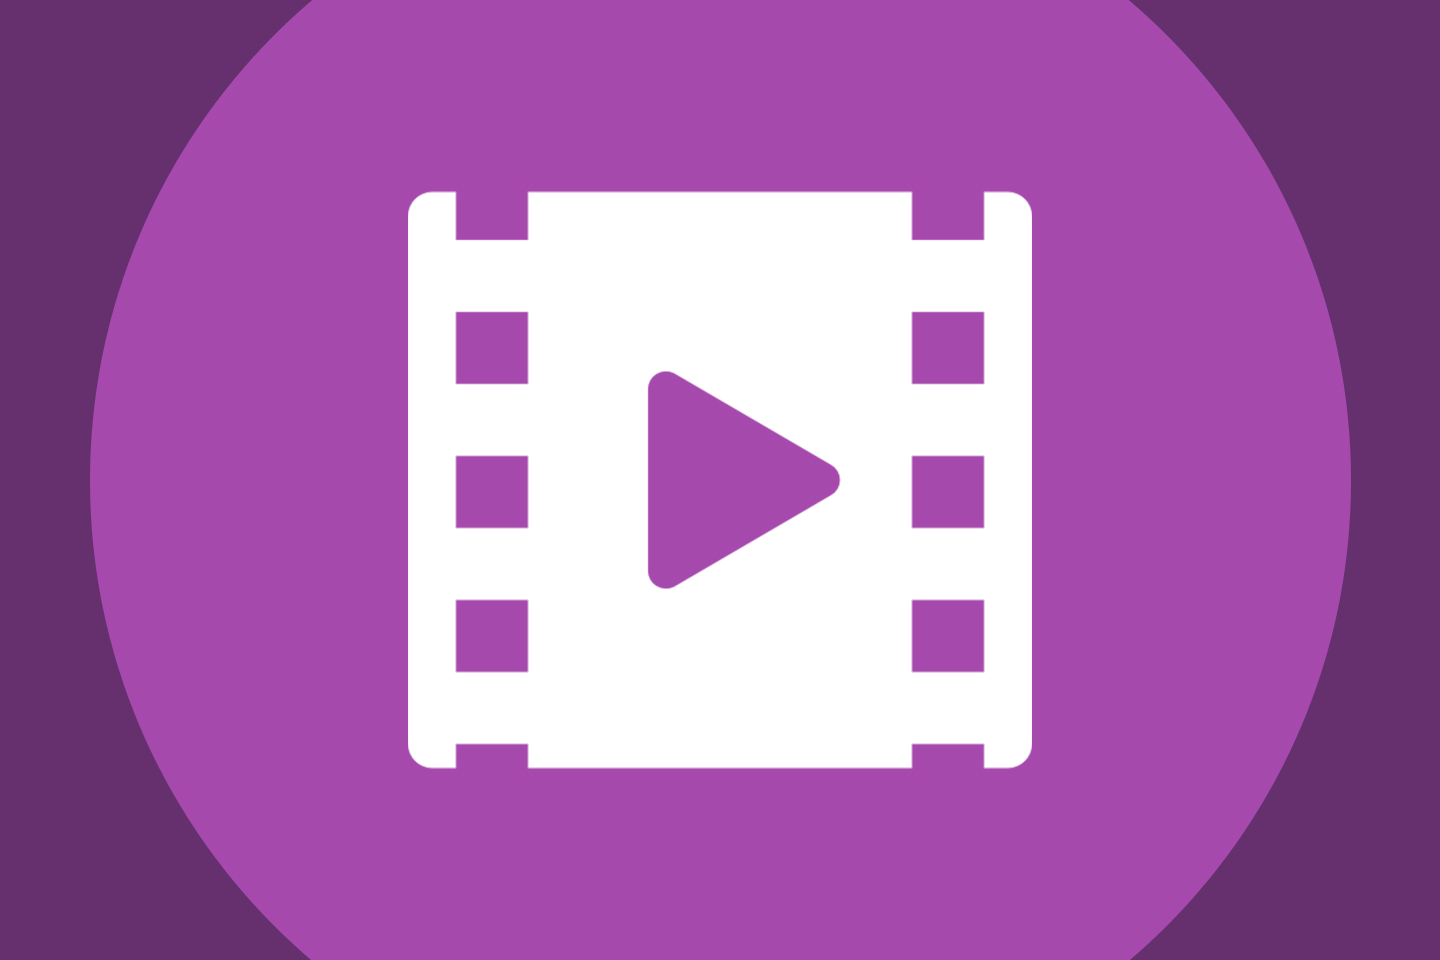 7 essential steps for editing professional videos | Digital communications team blog